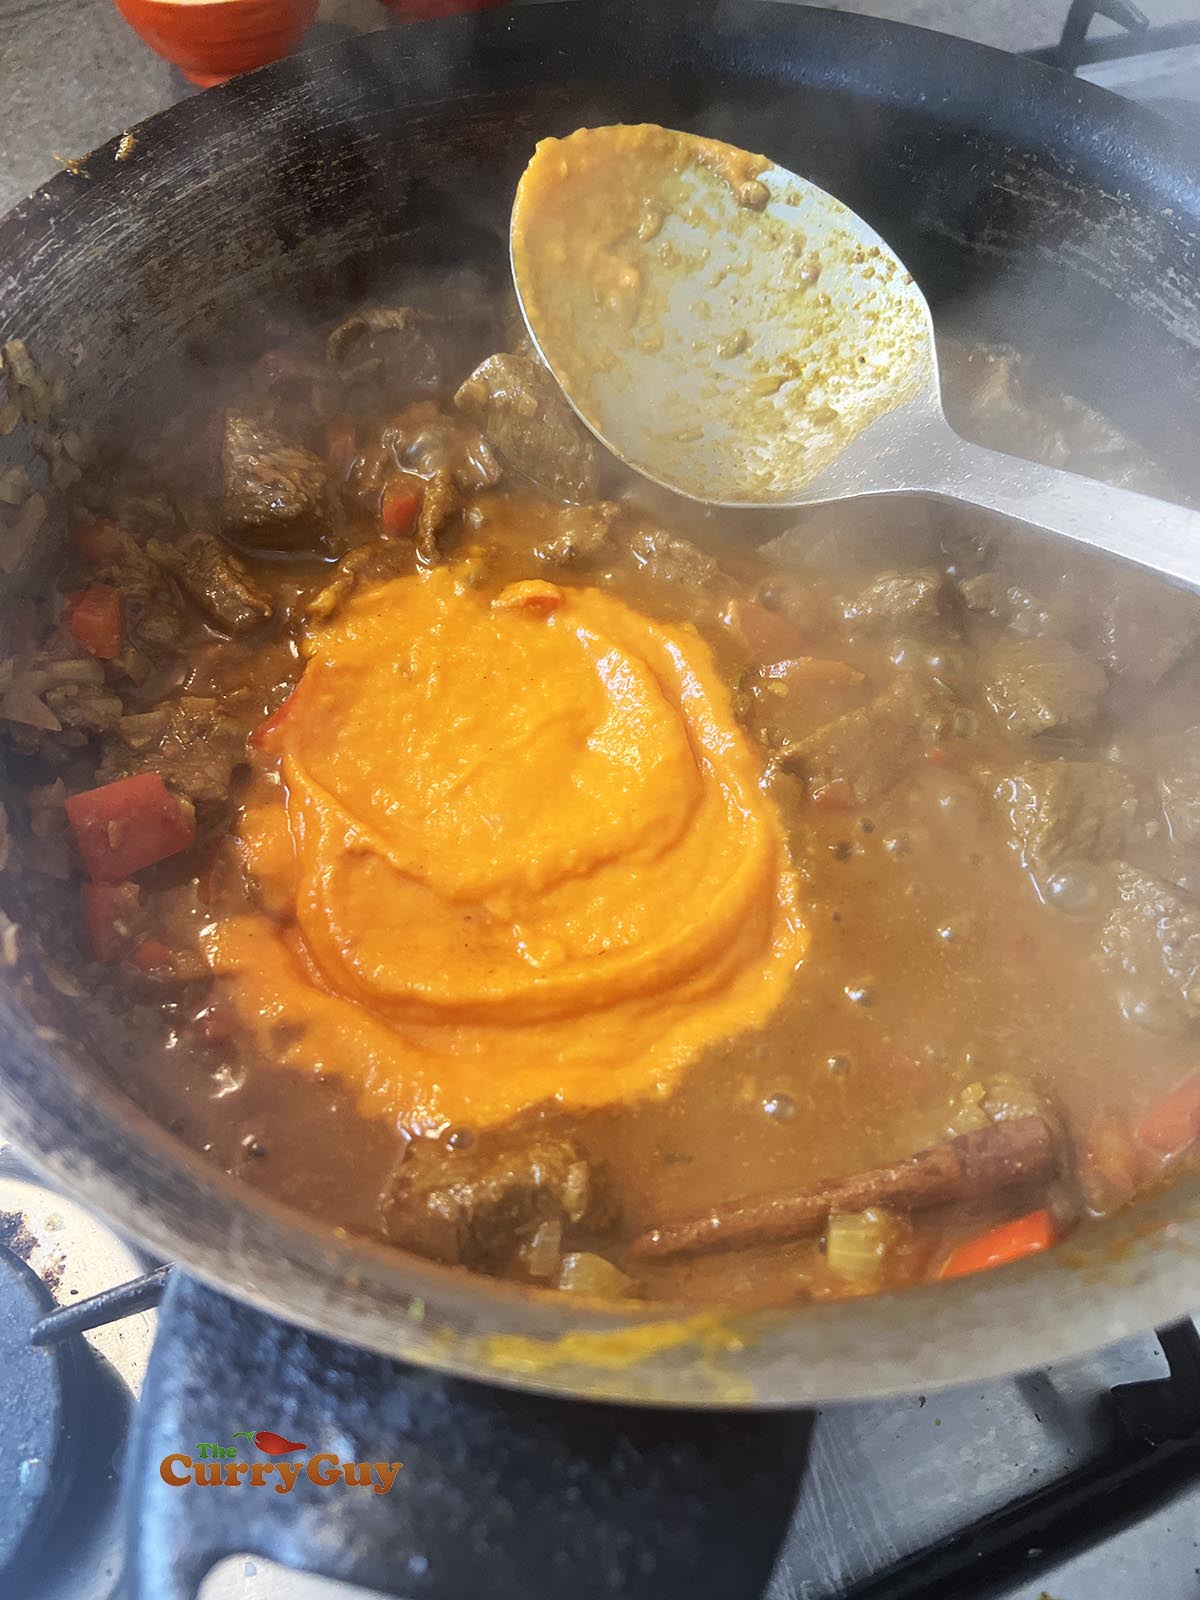 Adding smooth sauce to the pan.